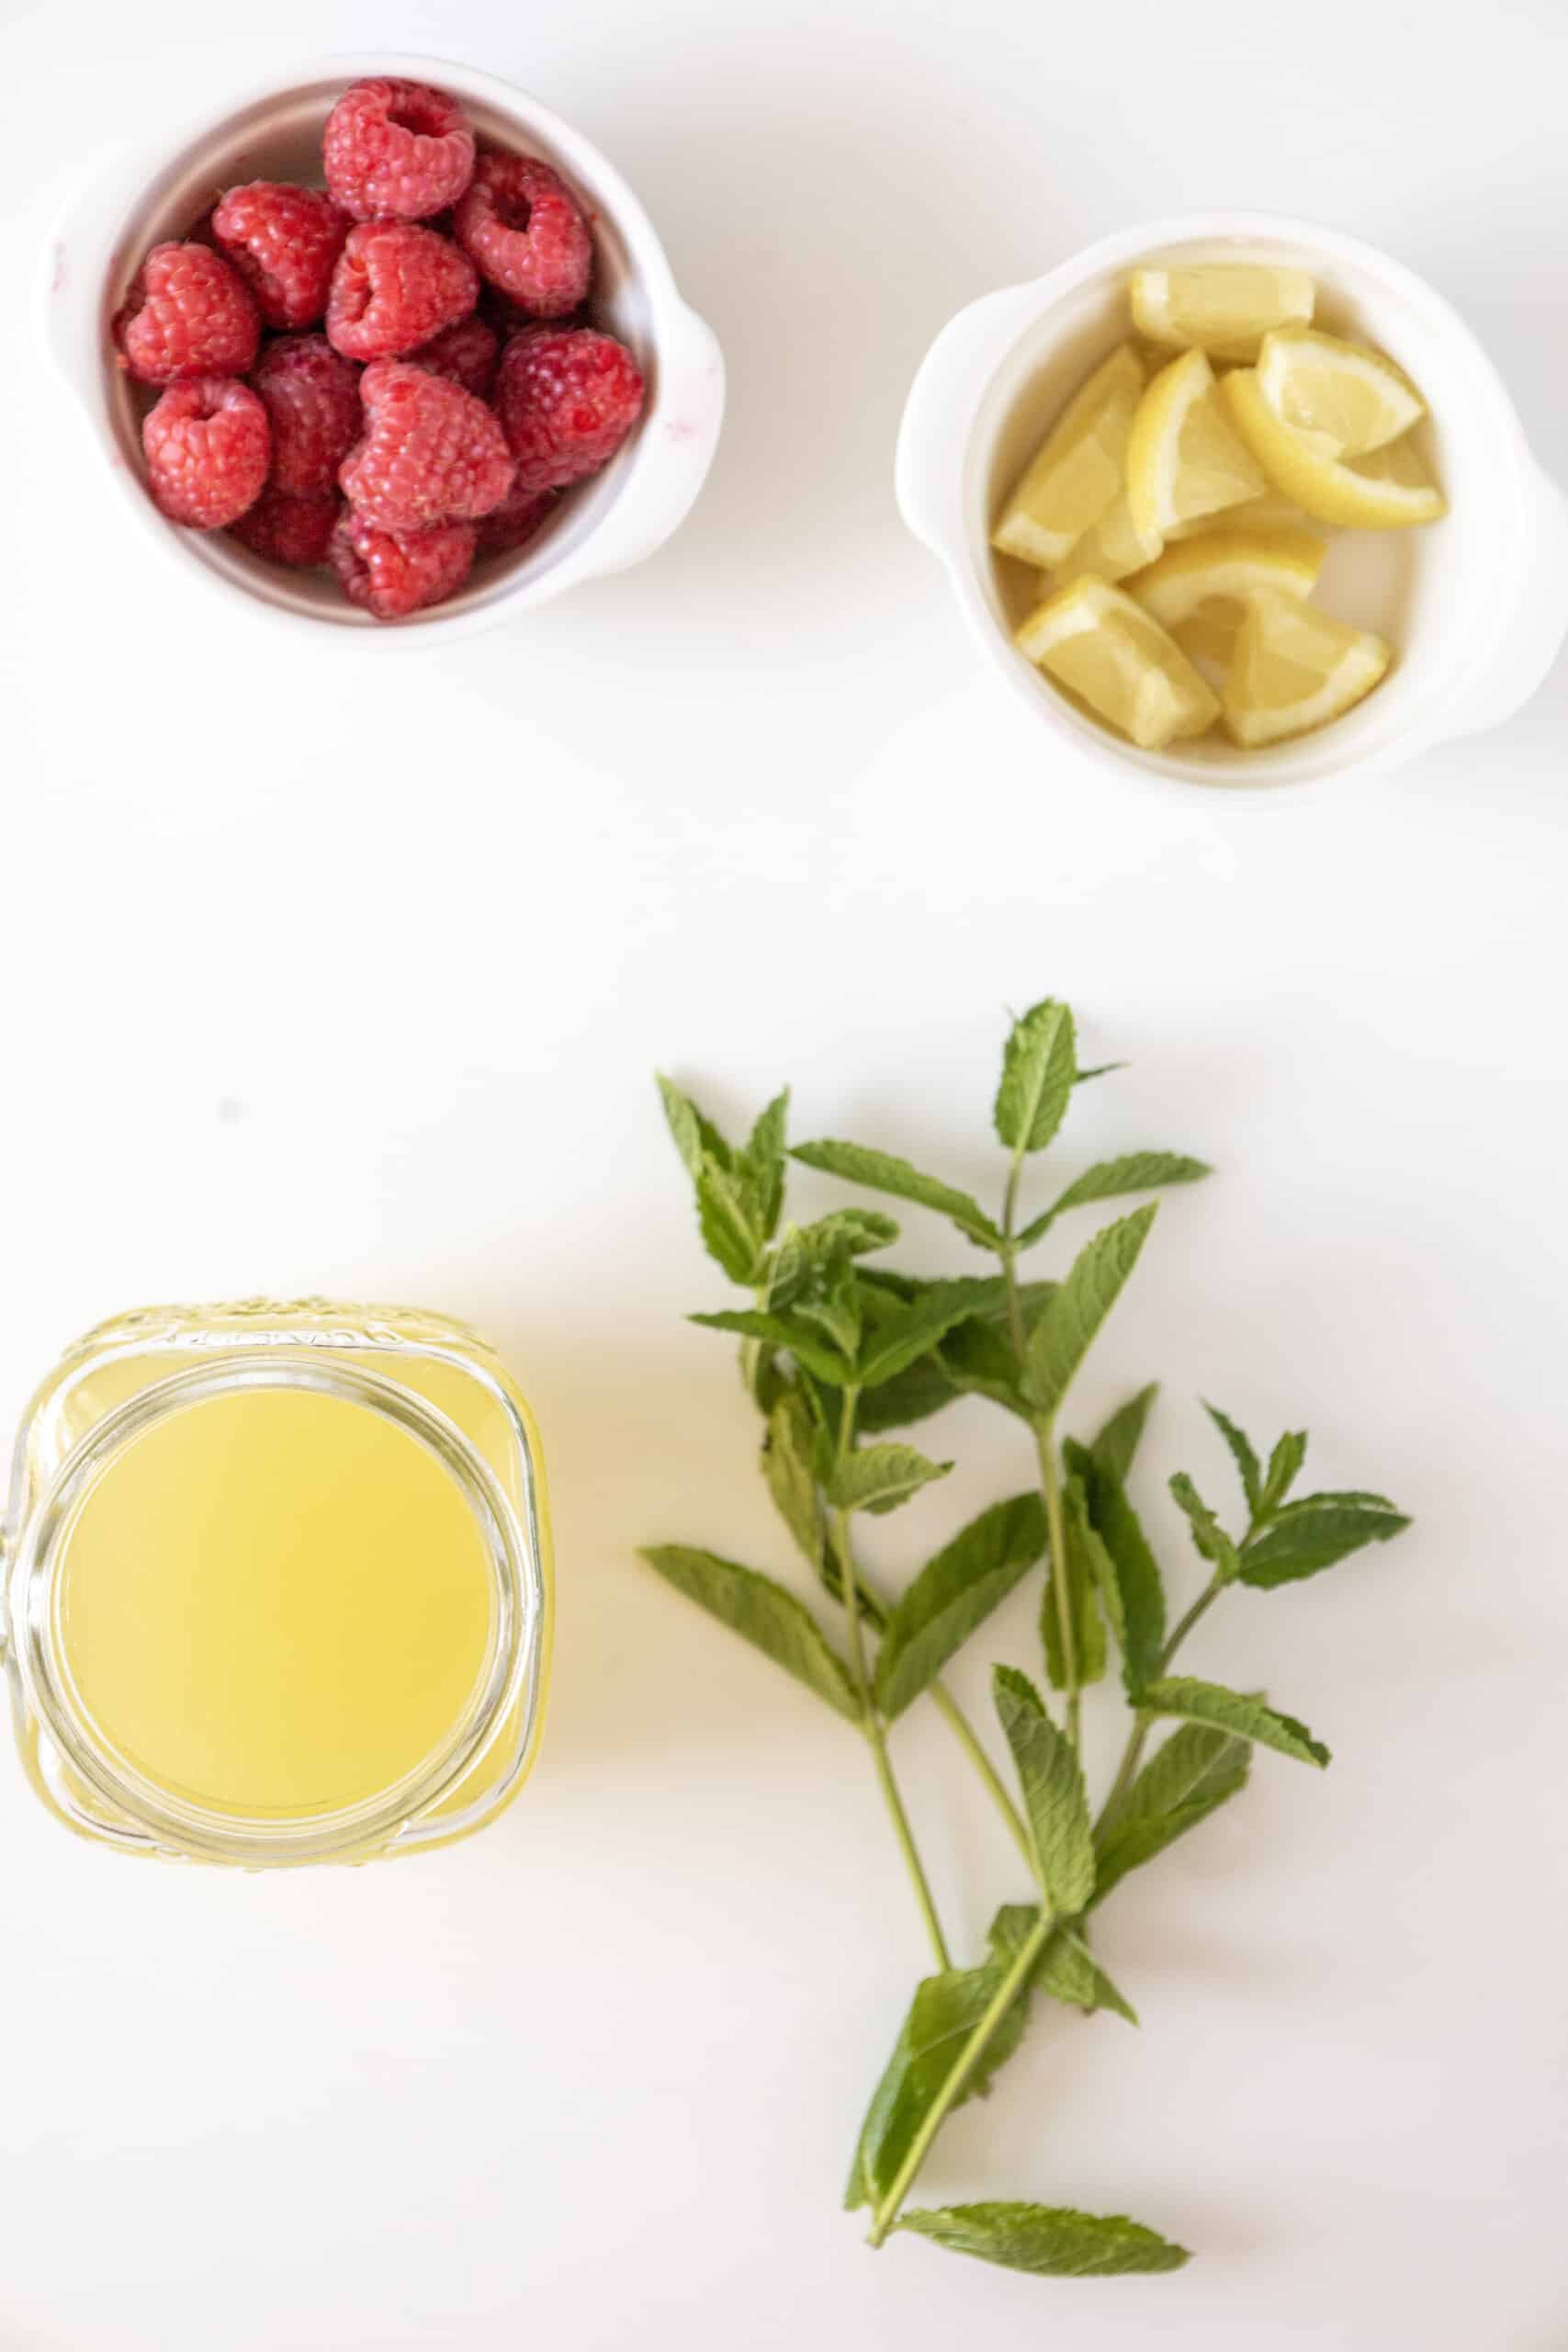 ingredients for raspberry mojito including raspberries, lemons, lemonade and mint